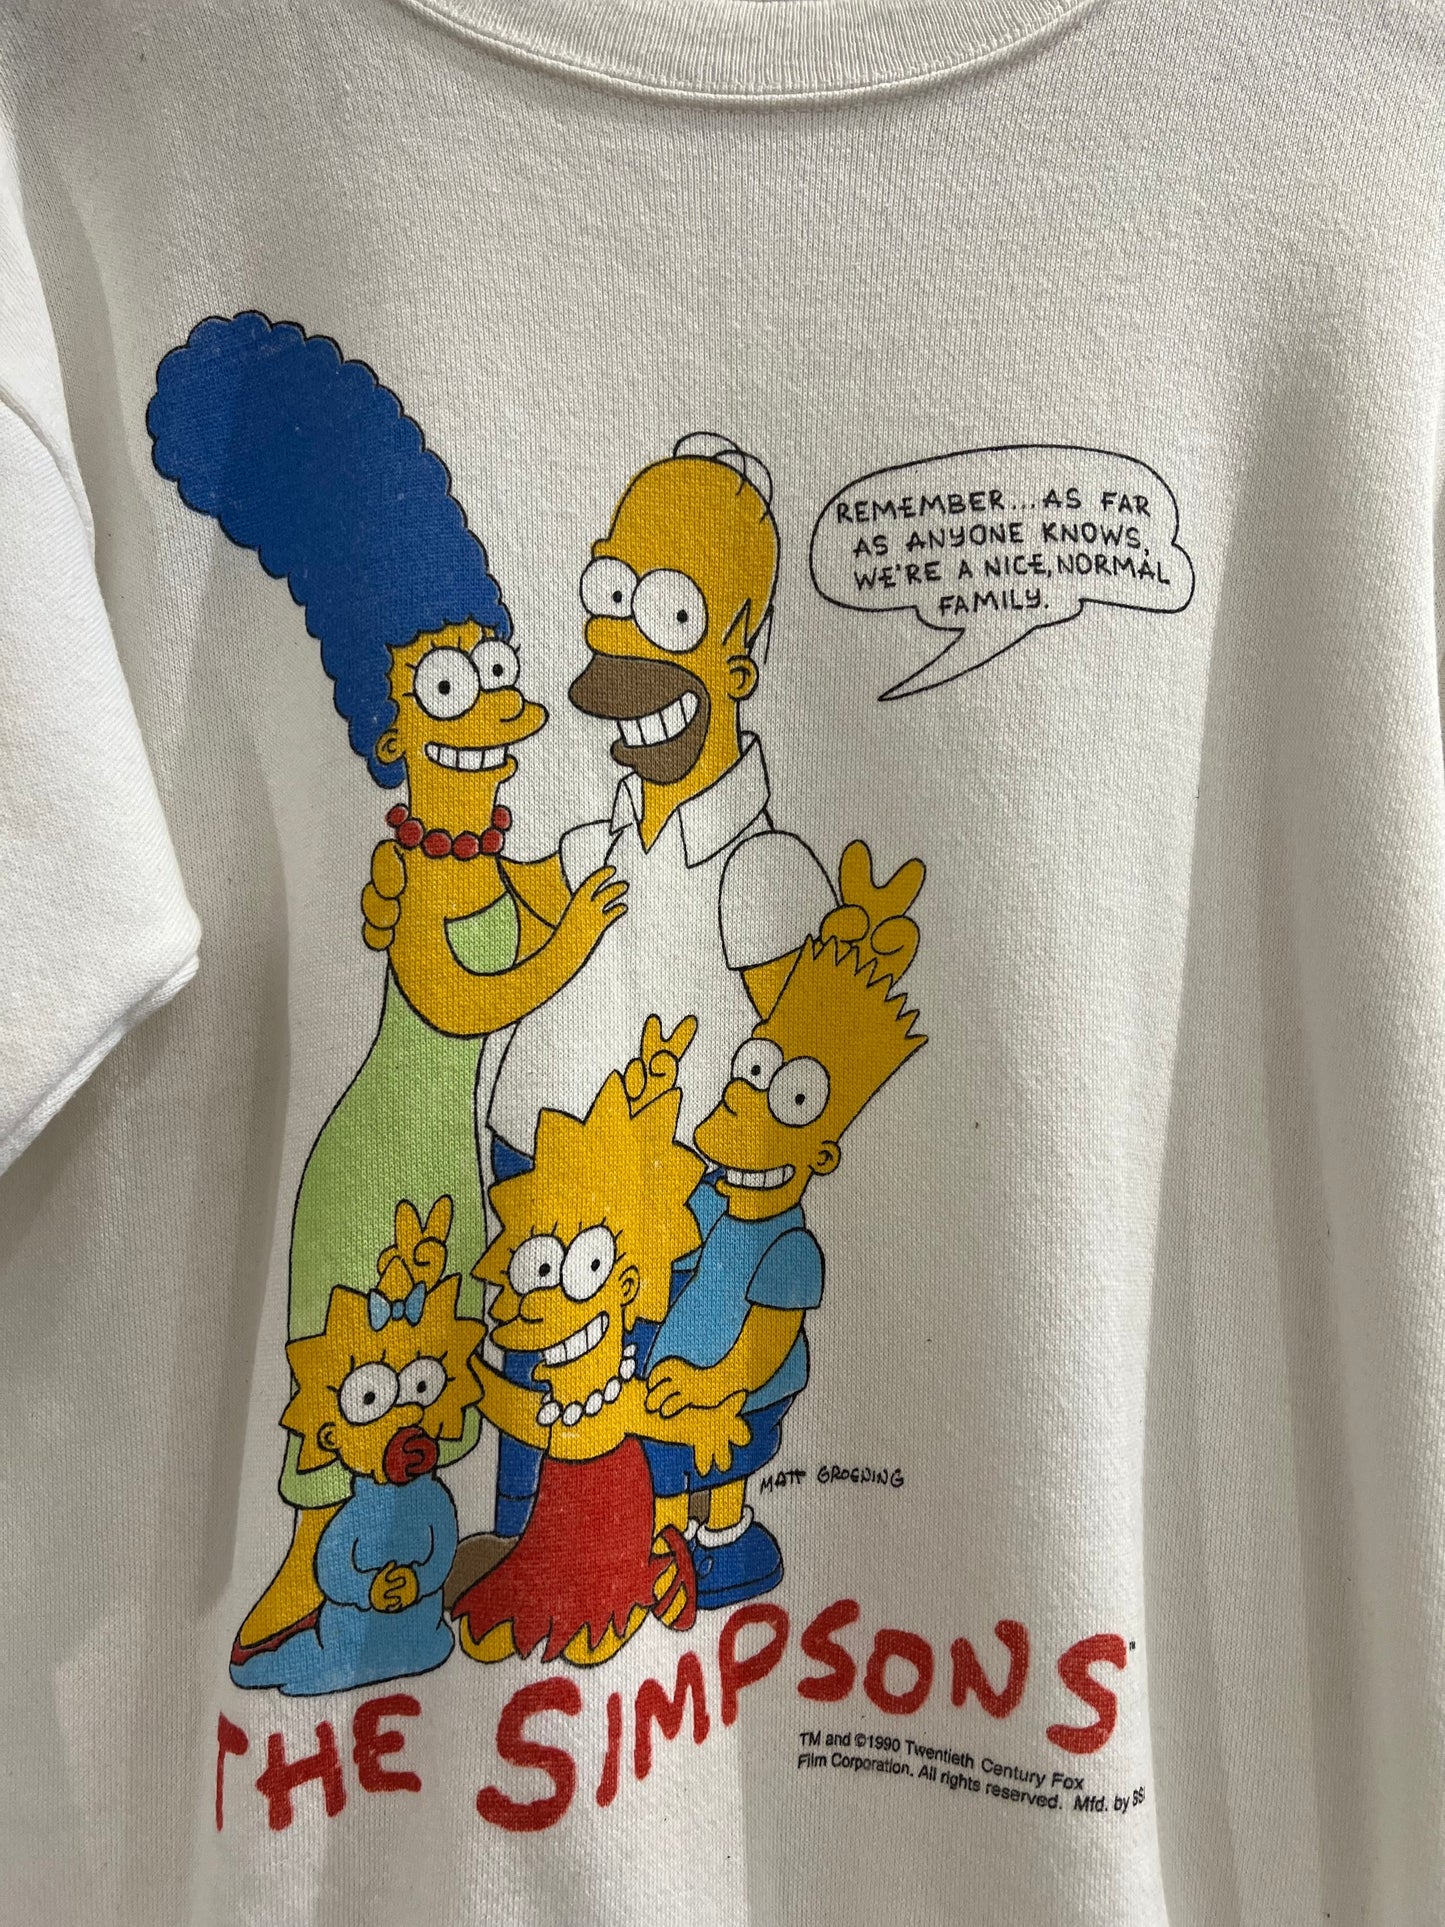 1990 The Simpsons Crewneck (M)